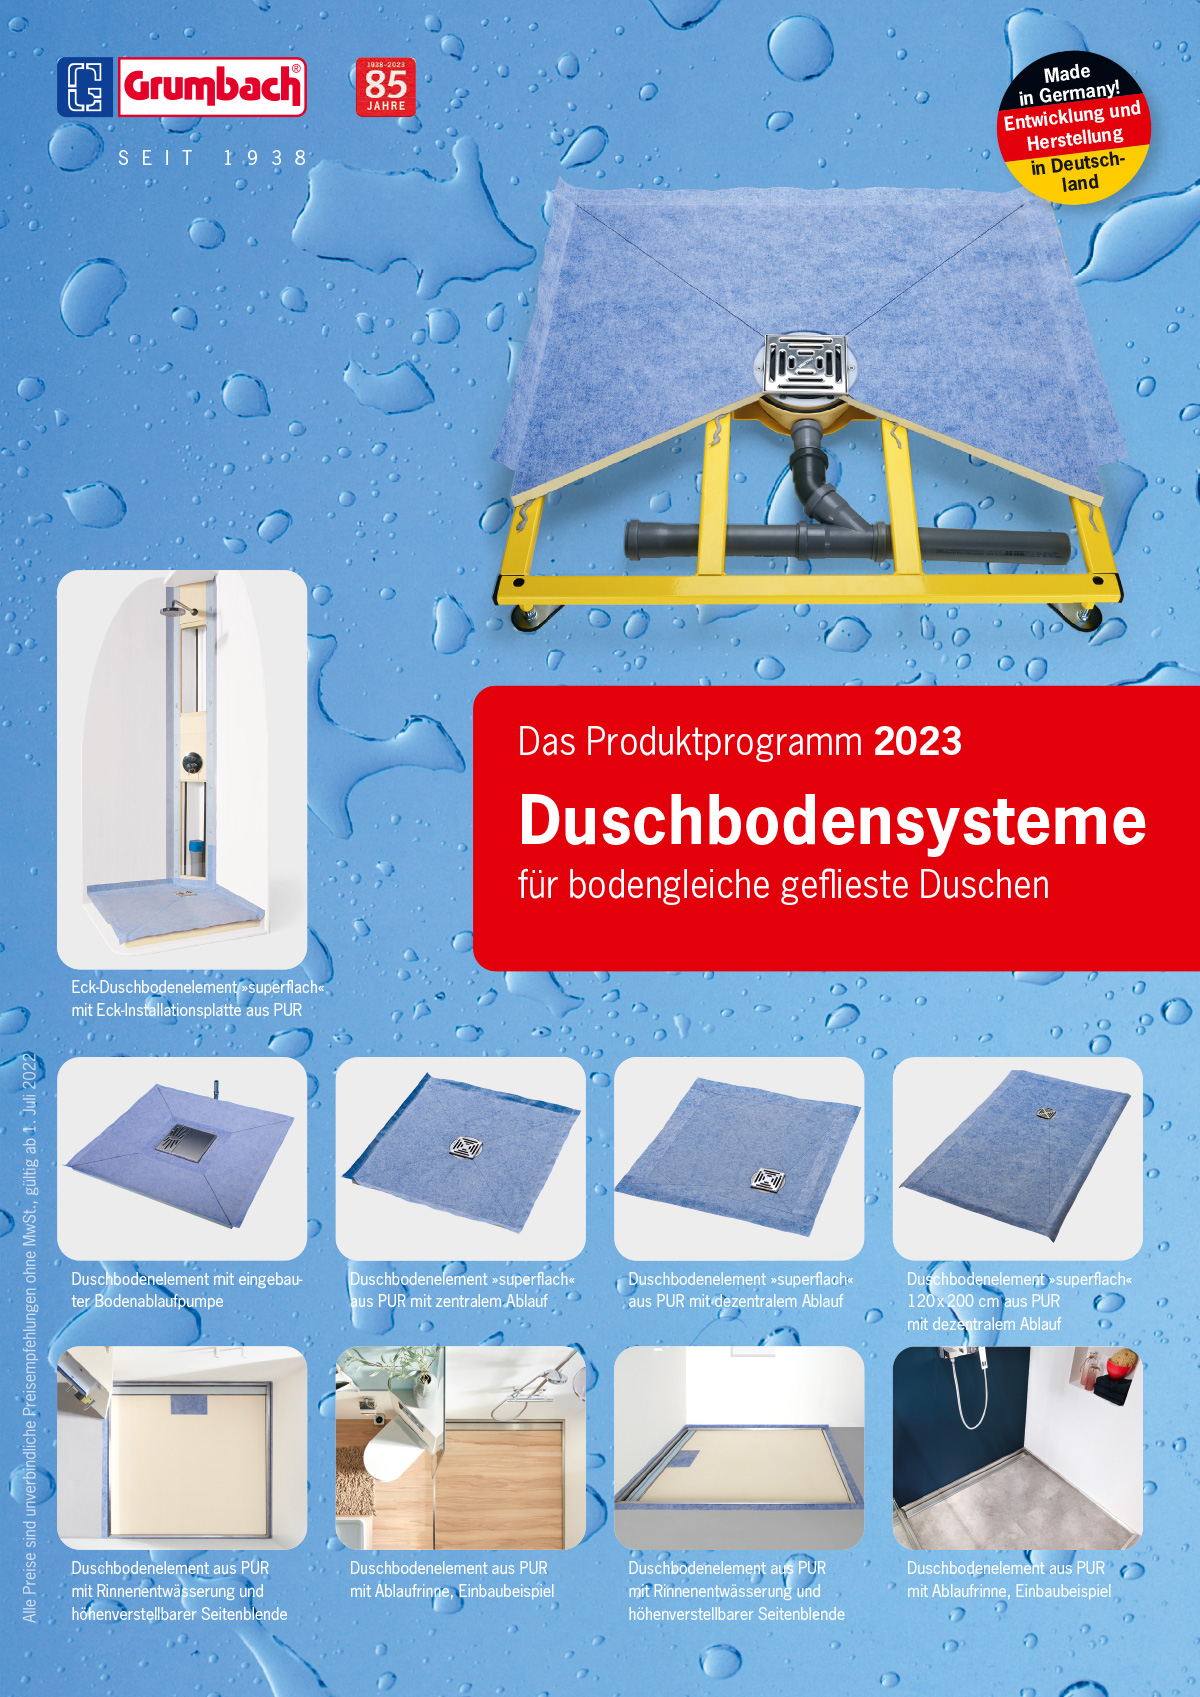 Titel-Grumbach-Duschbodensysteme-2022-I